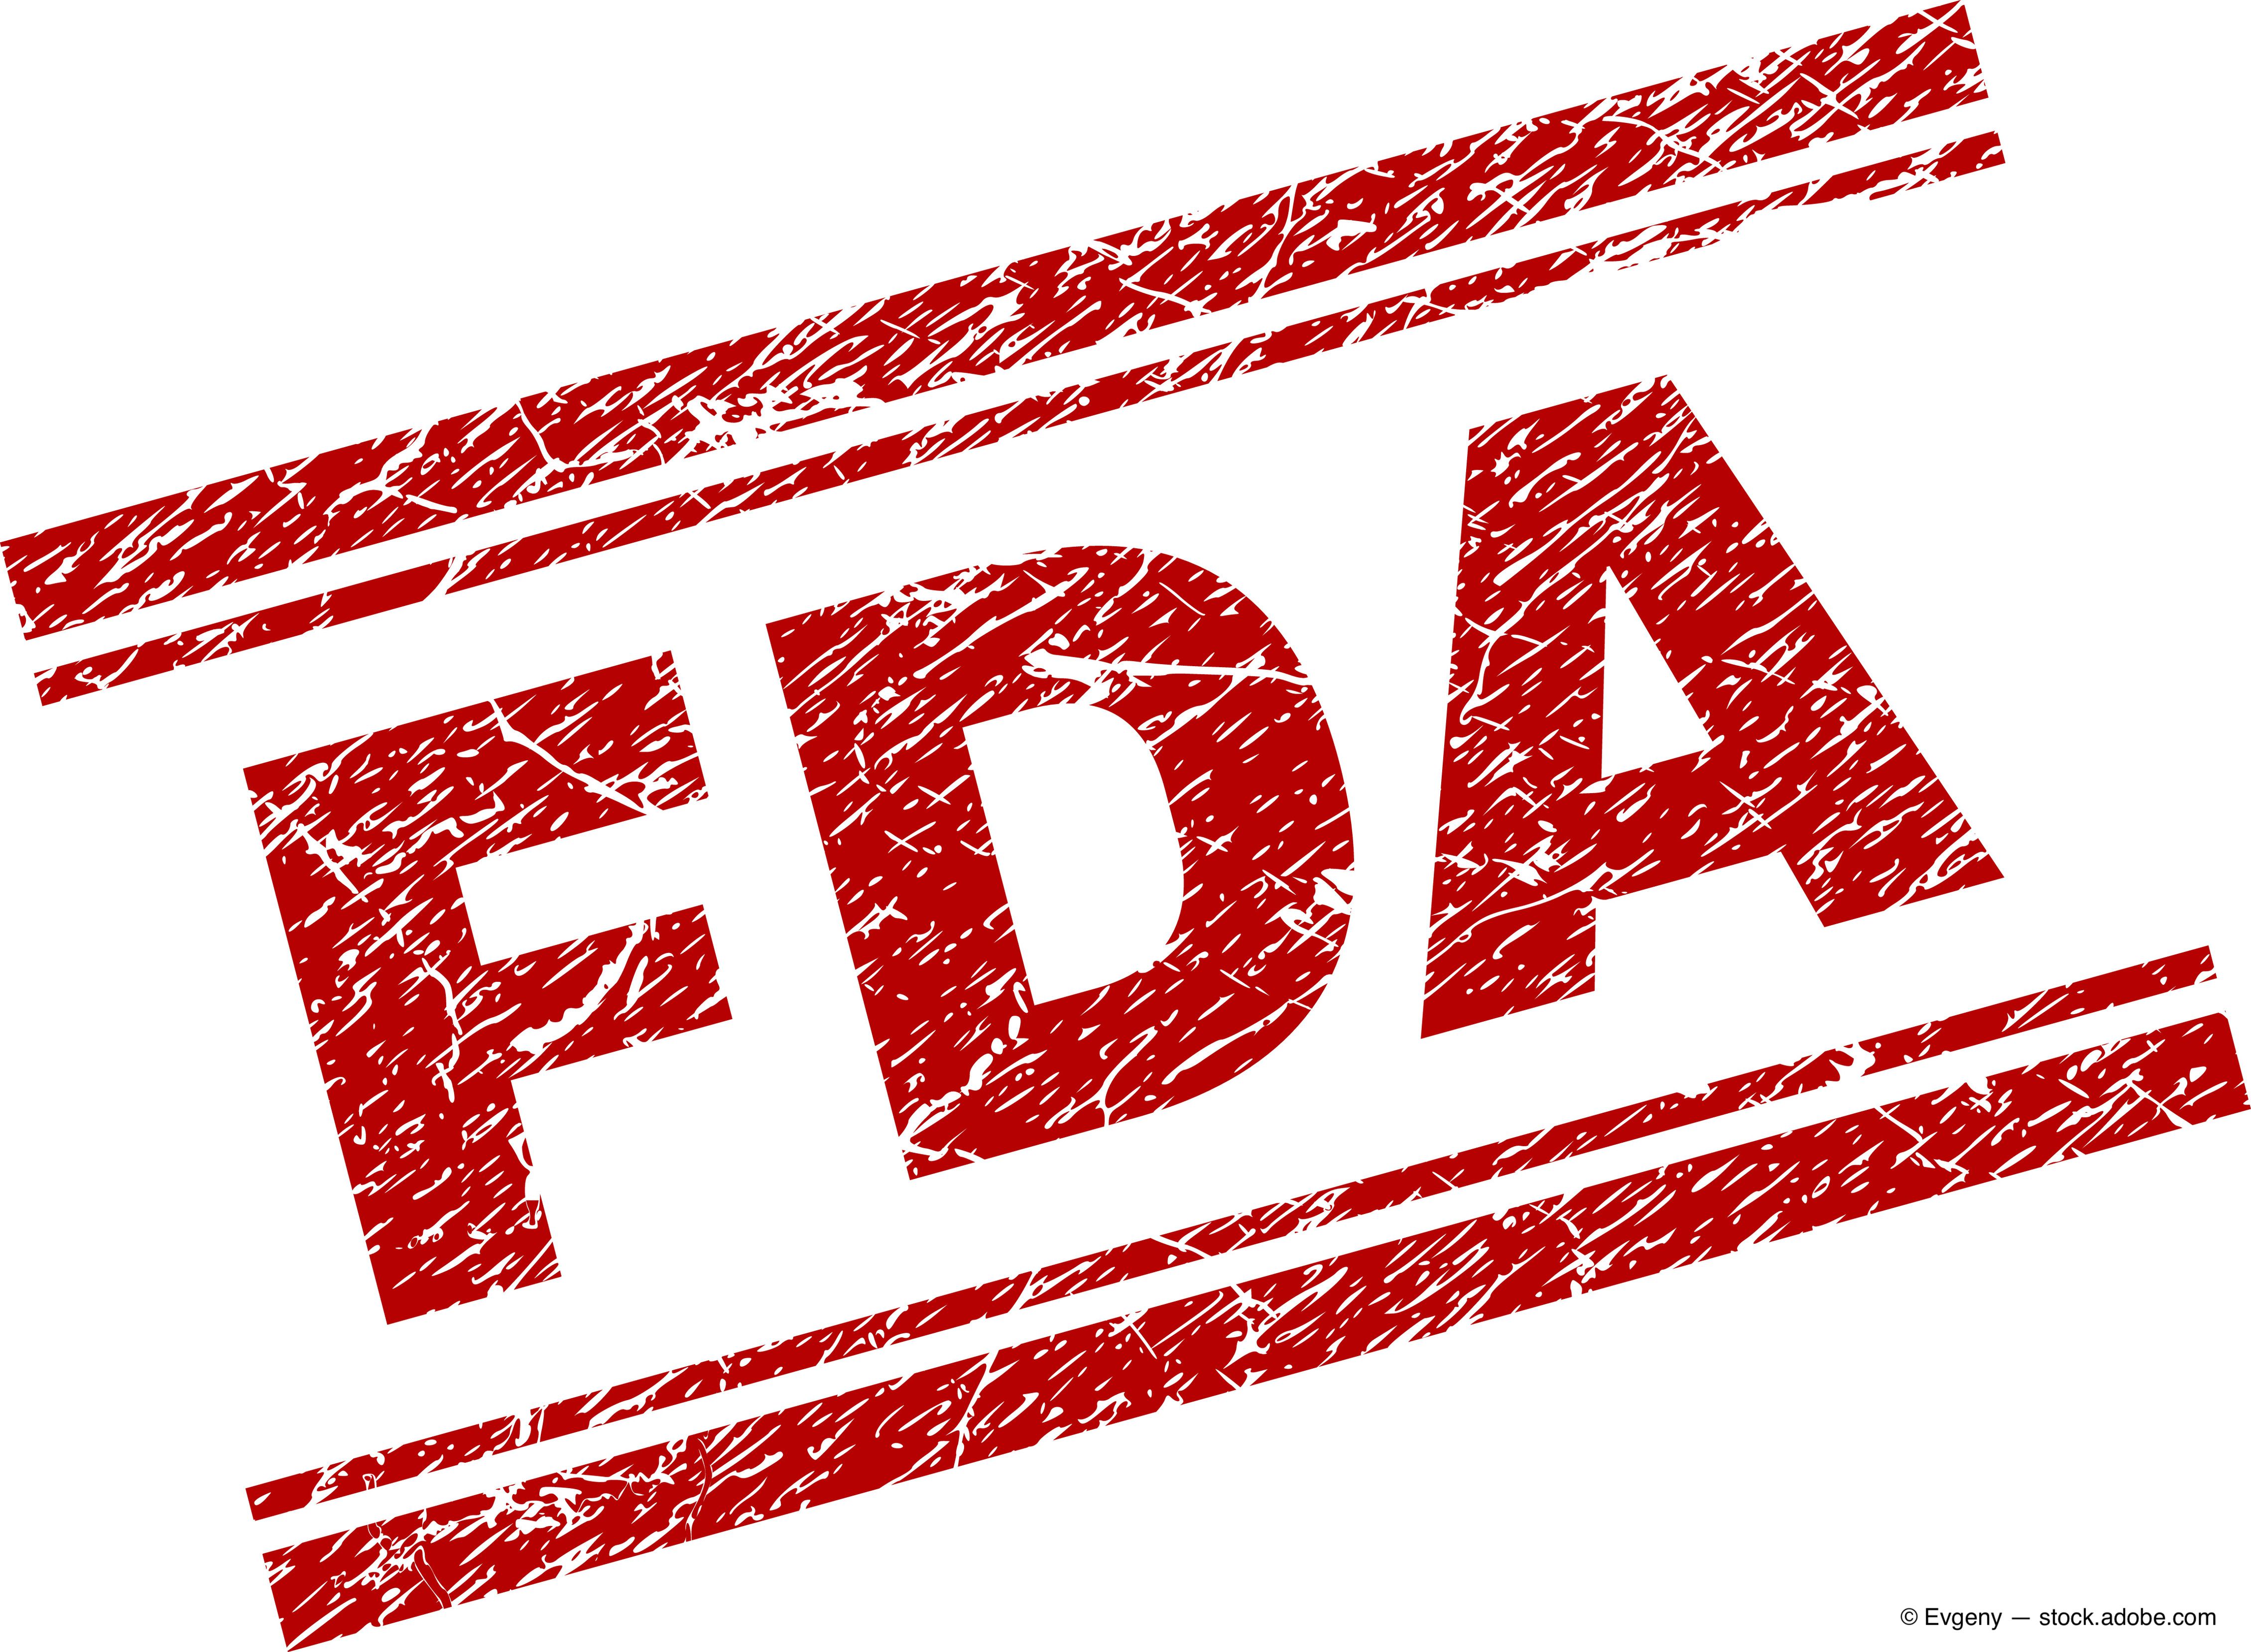 FDA grants fourth ODD for treatment of gene mutation-associated reginal diseases